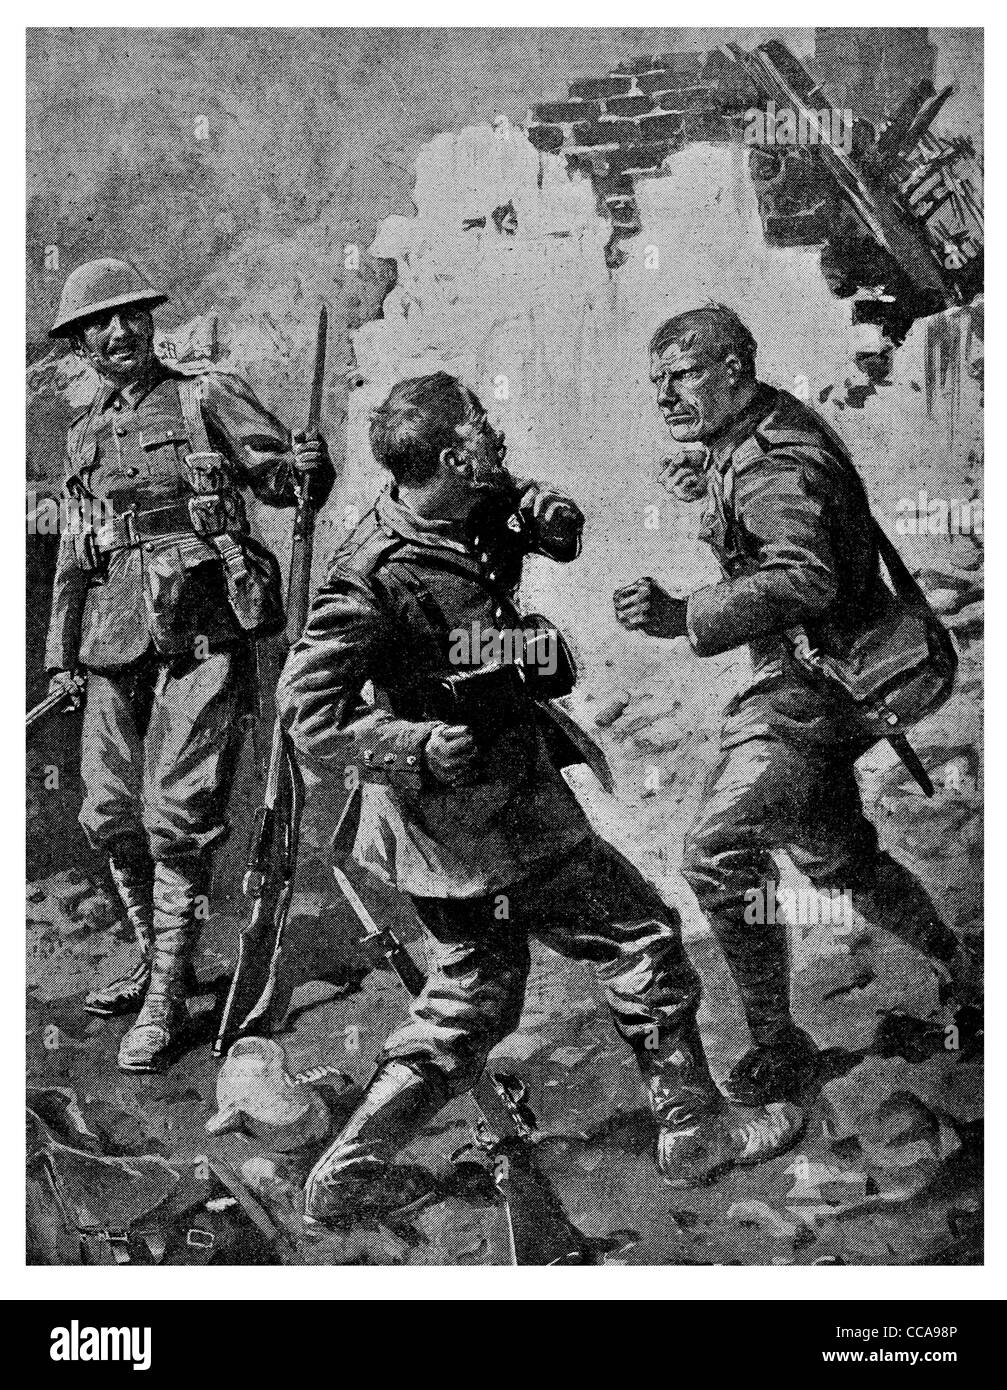 1916 hand fighting combat fist fight British German punch punching boxing anger rage rifle bayonet rubble uniform Stock Photo